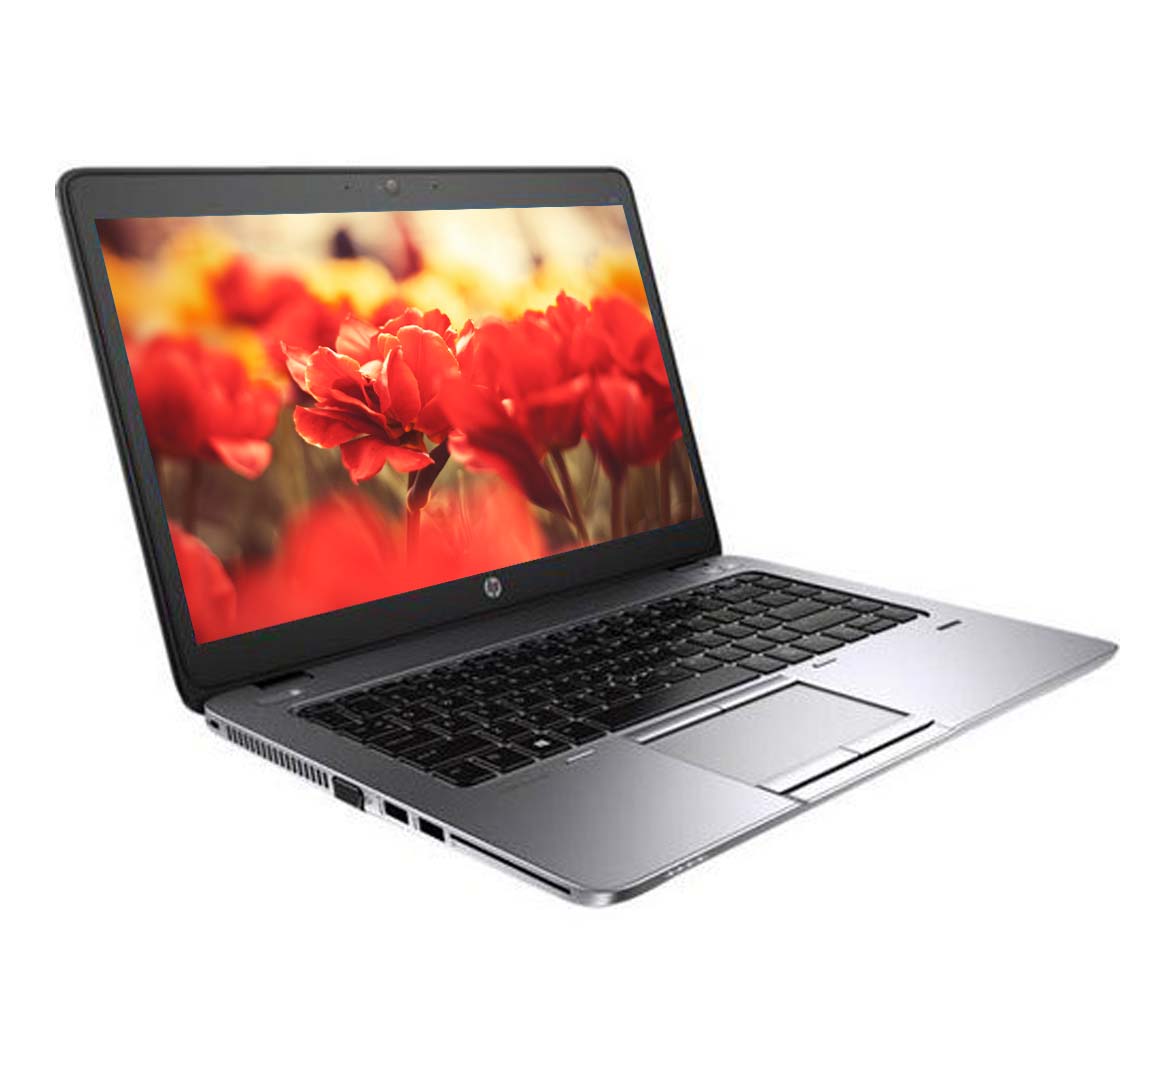 HP EliteBook 745 G2, AMD A10 Series CPU, 8GB RAM, 256GB SSD, AMD RADEON R7, 14 inch Touchscreen, Windows 10 Pro, Refurbished Laptop